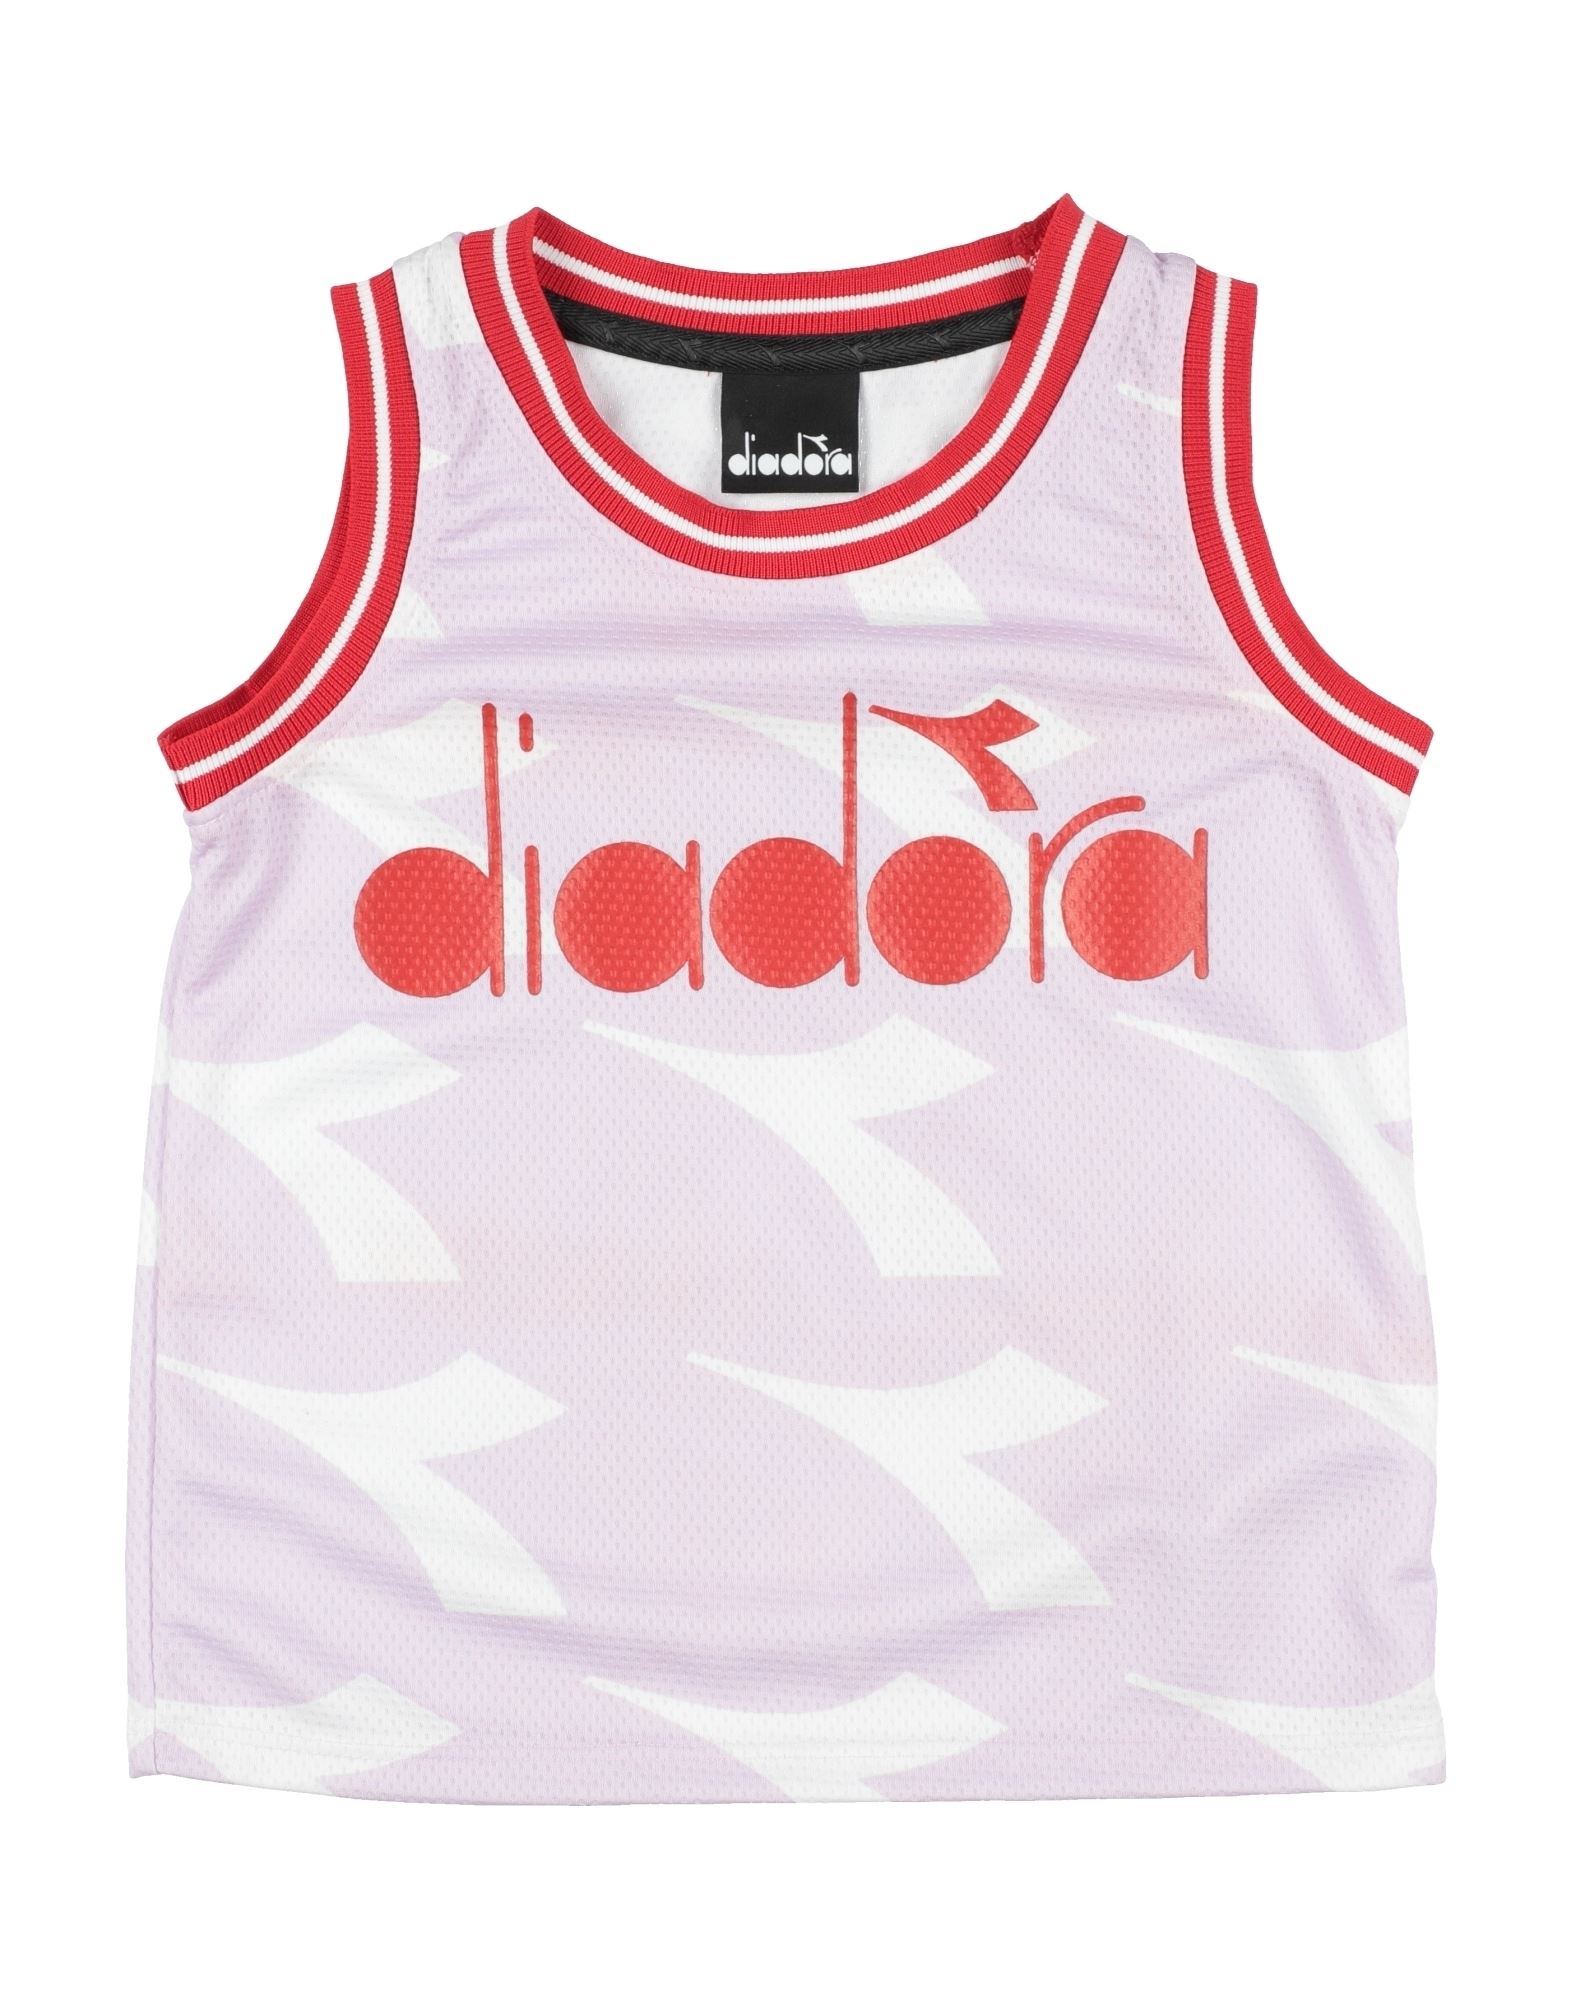 Diadora Kids' T-shirts In Pink